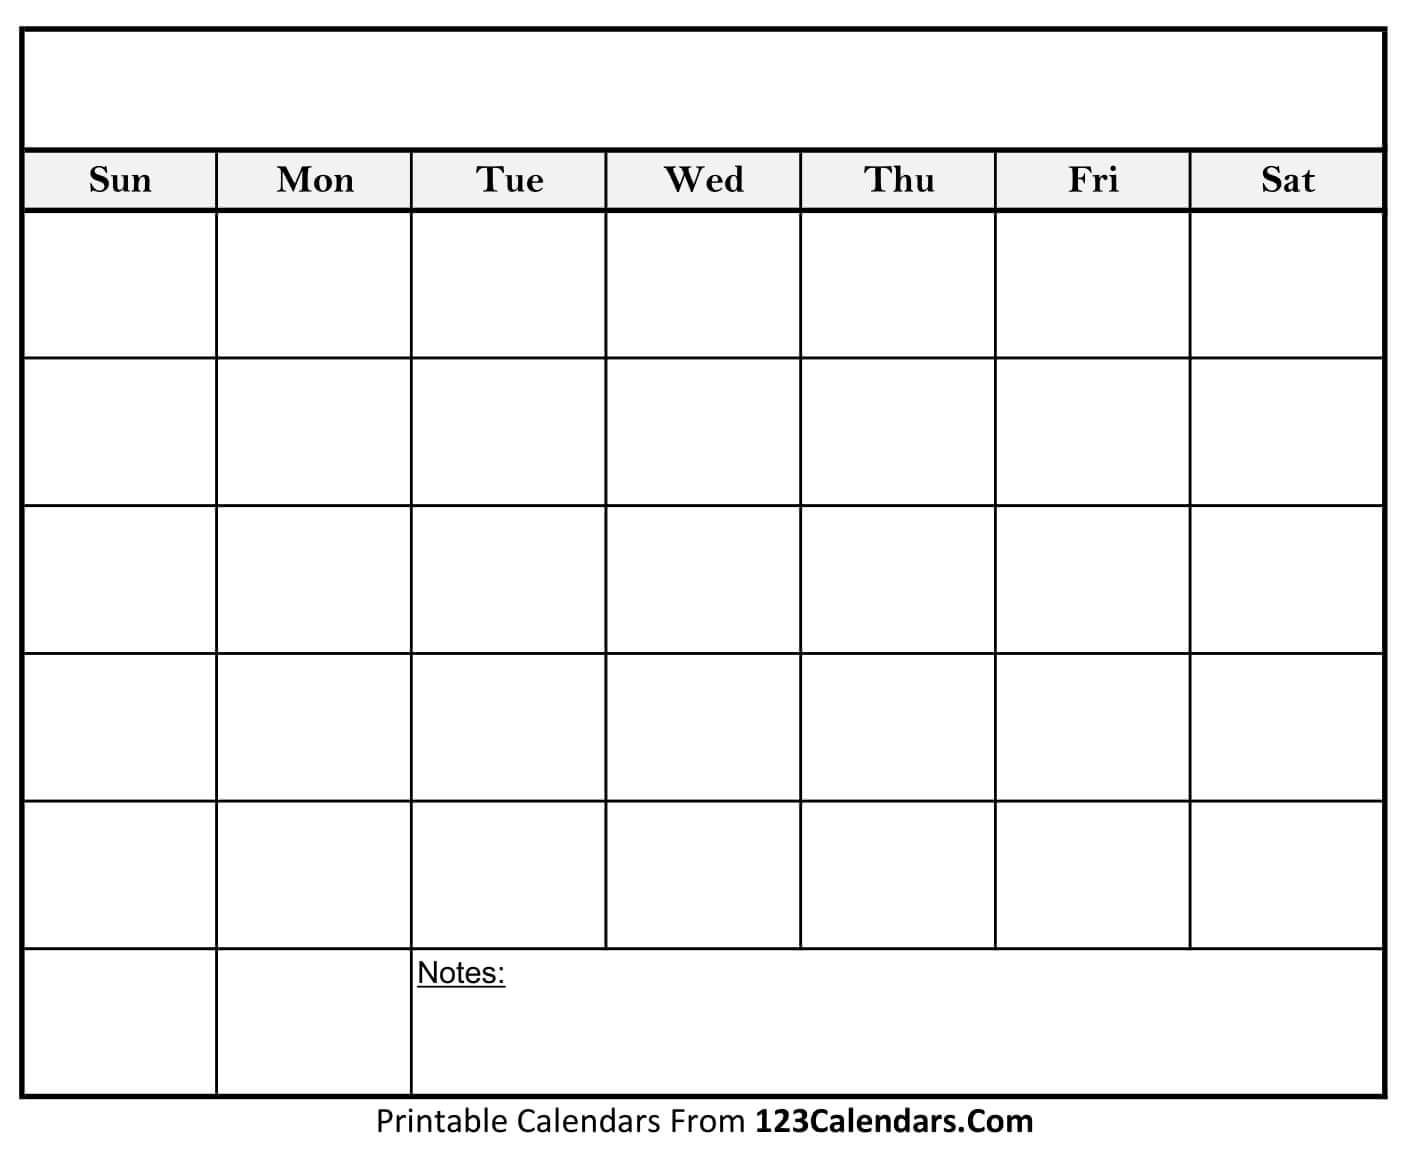 Free Printable Blank Calendar | 123Calendars